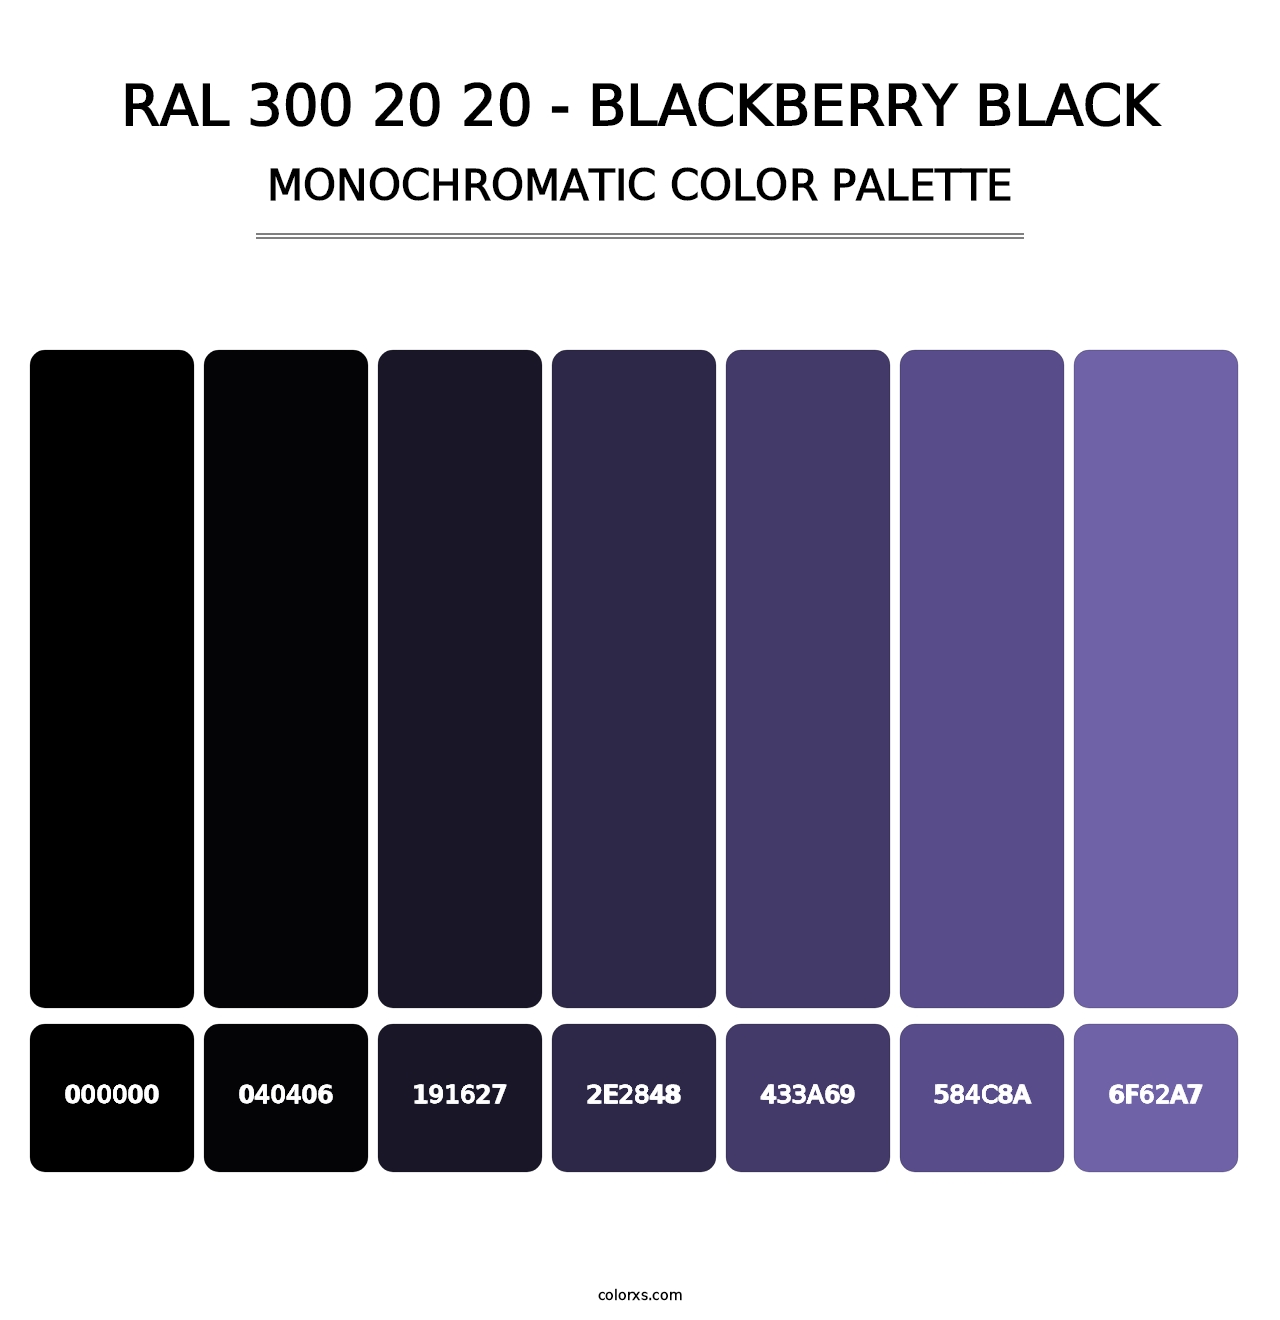 RAL 300 20 20 - Blackberry Black - Monochromatic Color Palette